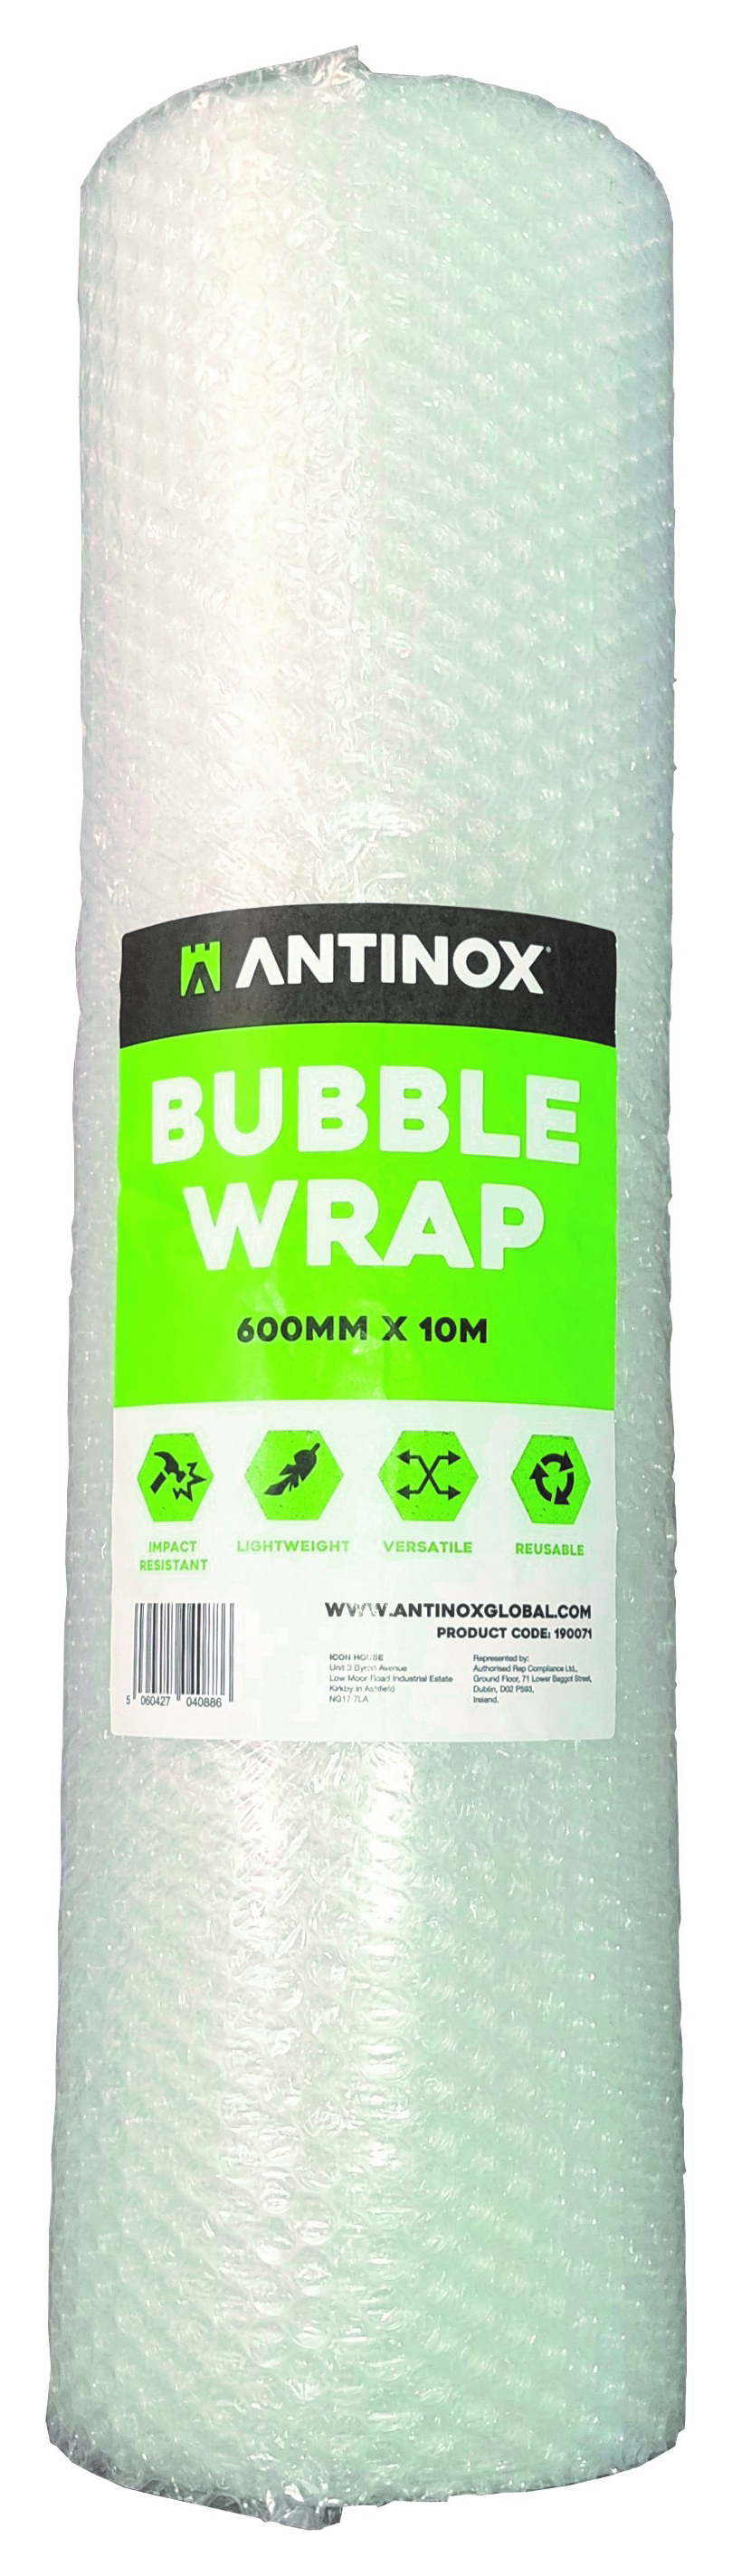 Antinox Bubble Wrap - 600mm x 10m